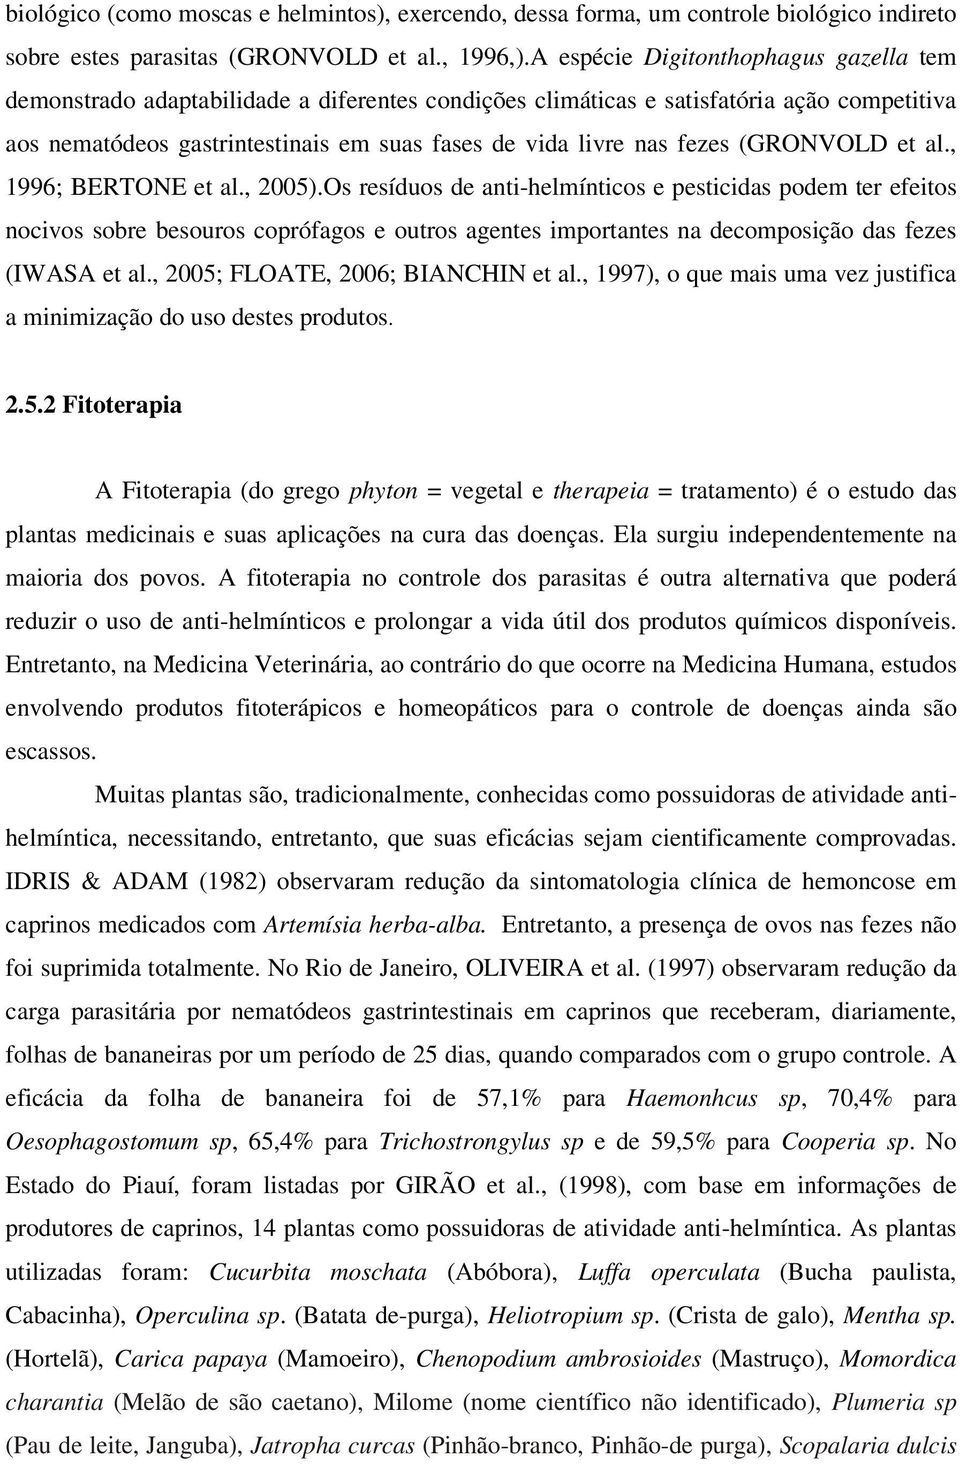 fezes (GRONVOLD et al., 1996; BERTONE et al., 2005).